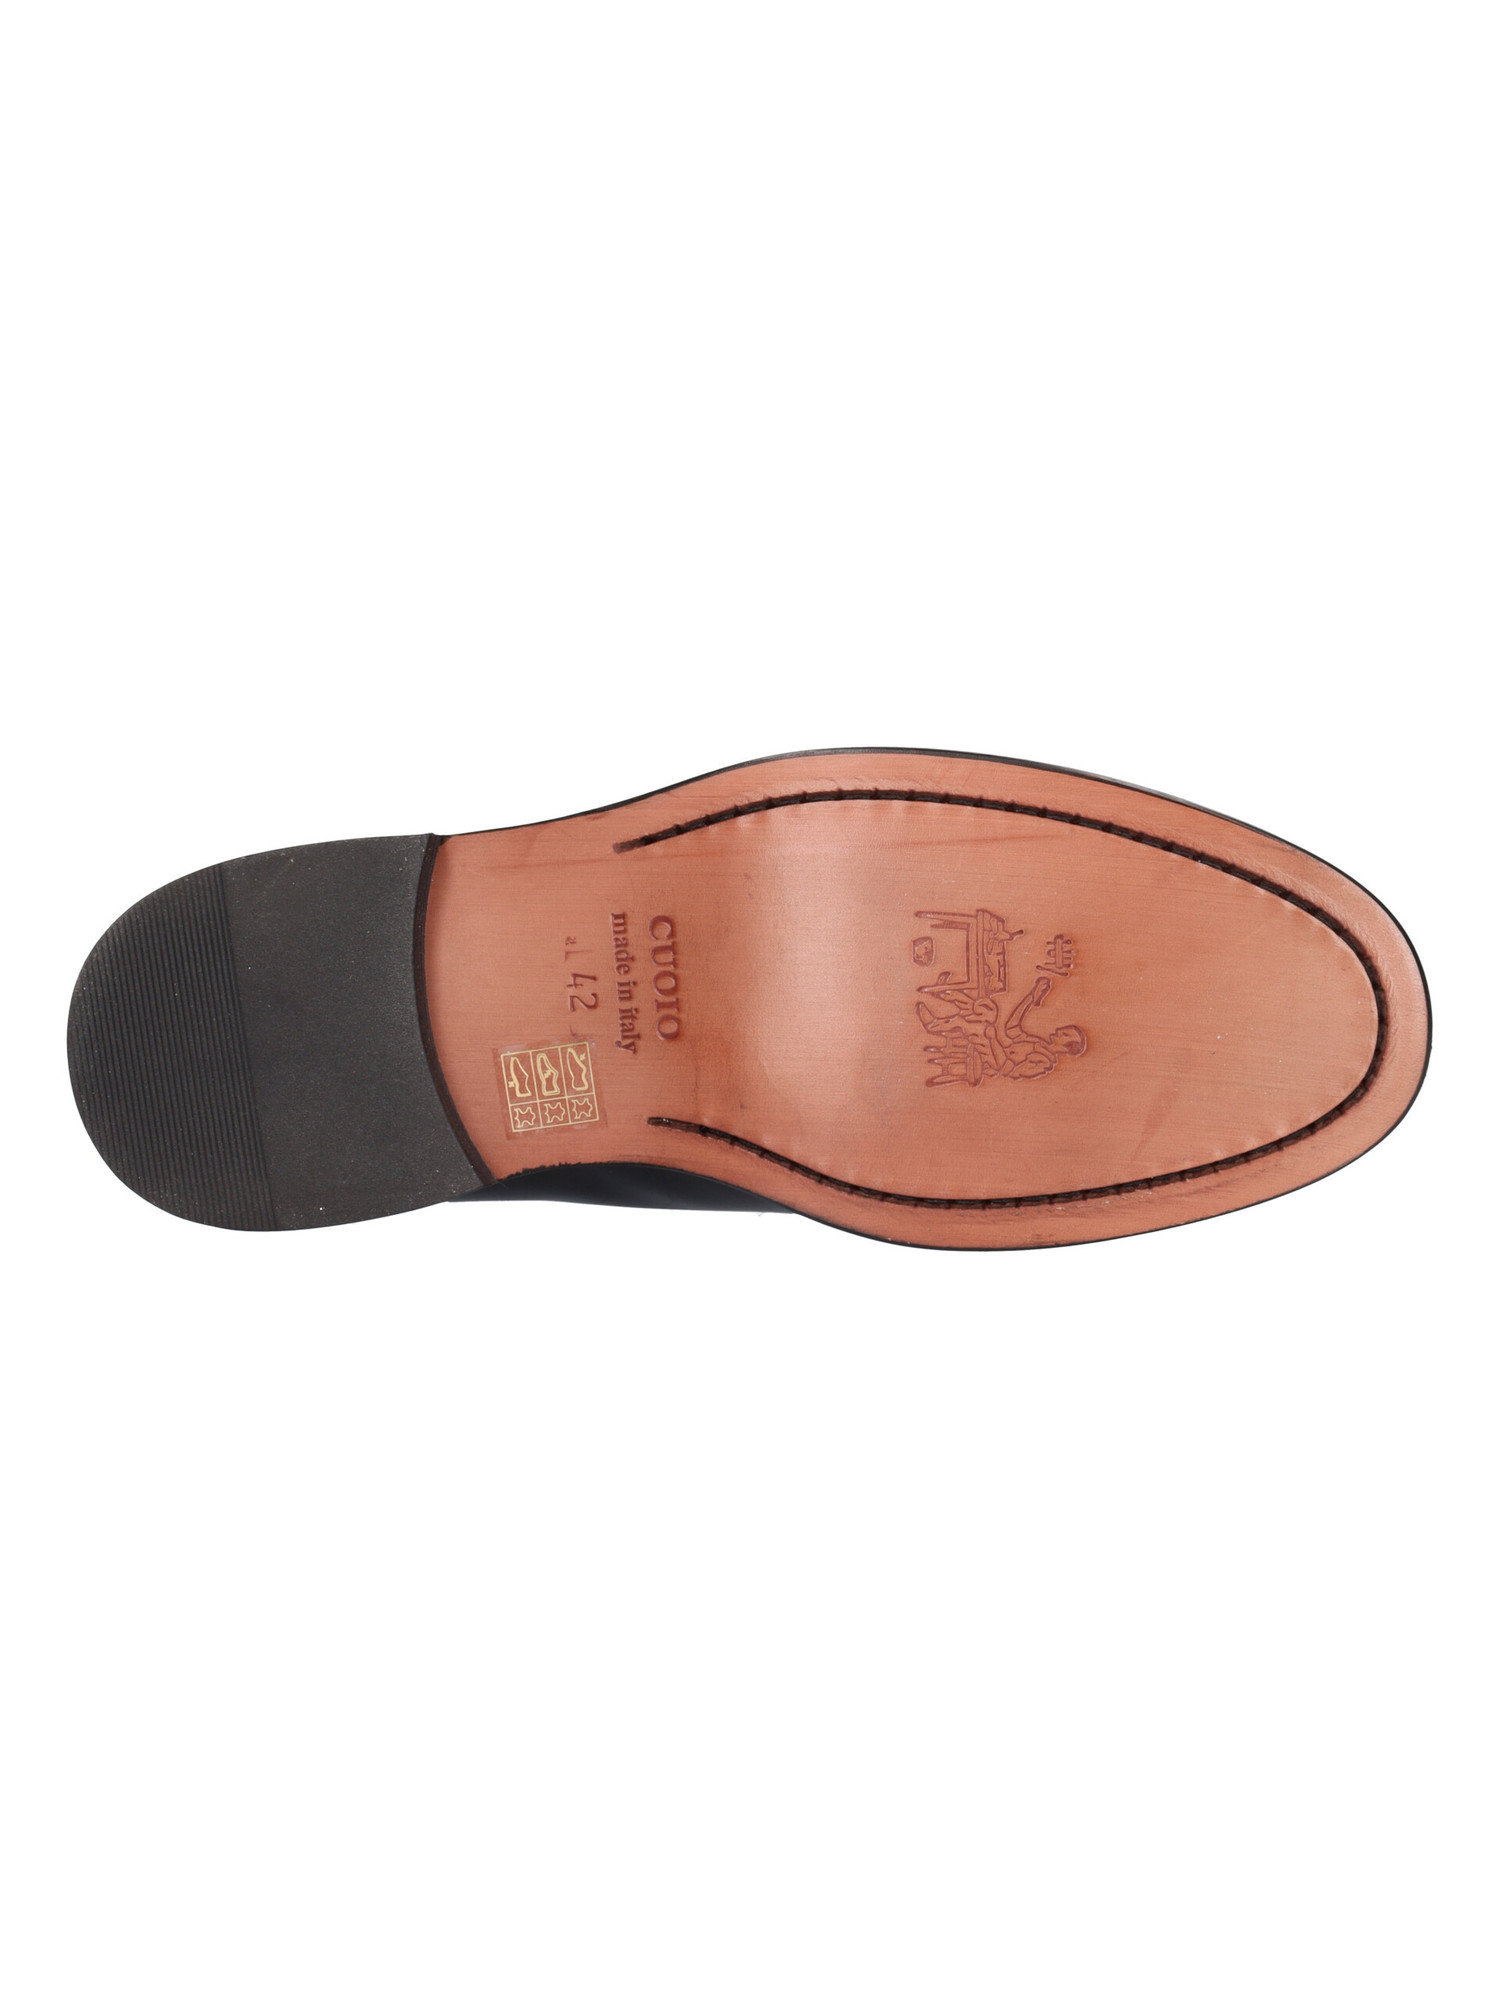 scarpa-elegante-mercanti-fiorentini-da-uomo-nera-9d0504